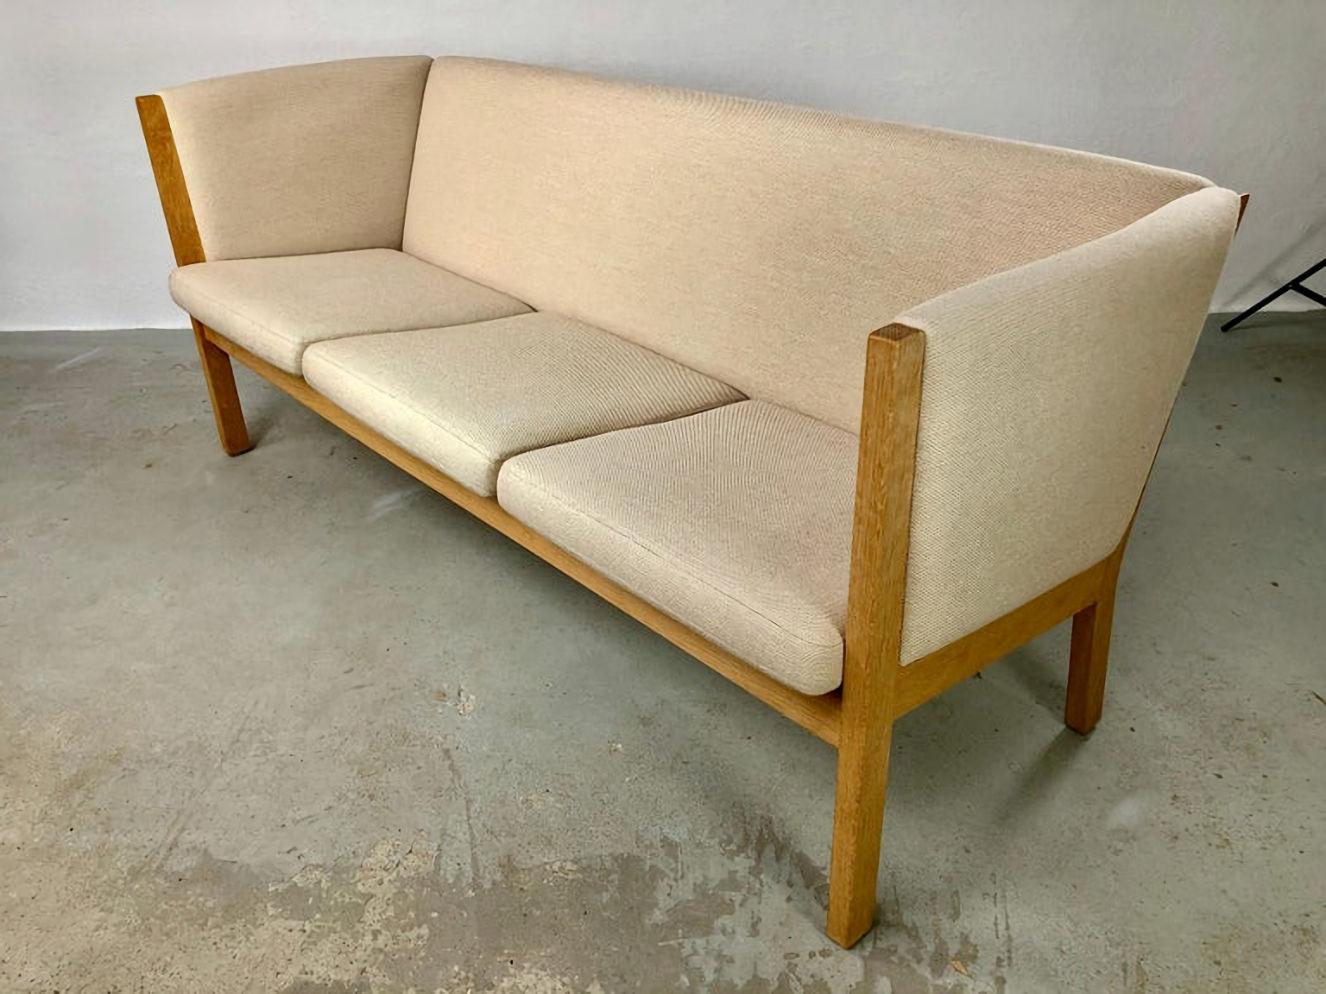 Modern Danish Hans J. Wegner Three-Seat GE-285 Jubilee Sofa in Oak and Fabric by GETAMA For Sale